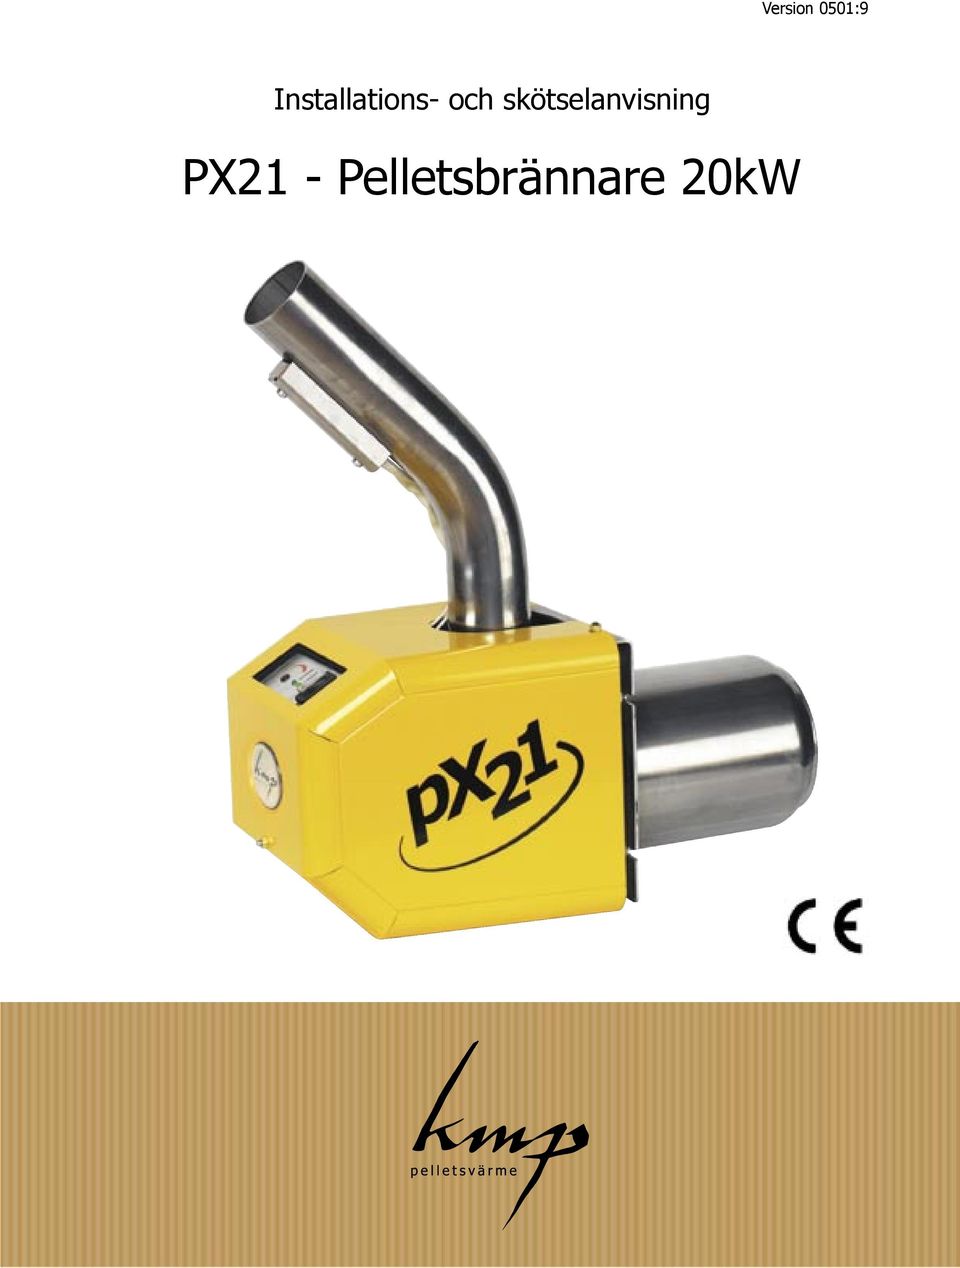 PX21 - Pelletsbrännare 20kW - PDF Free Download